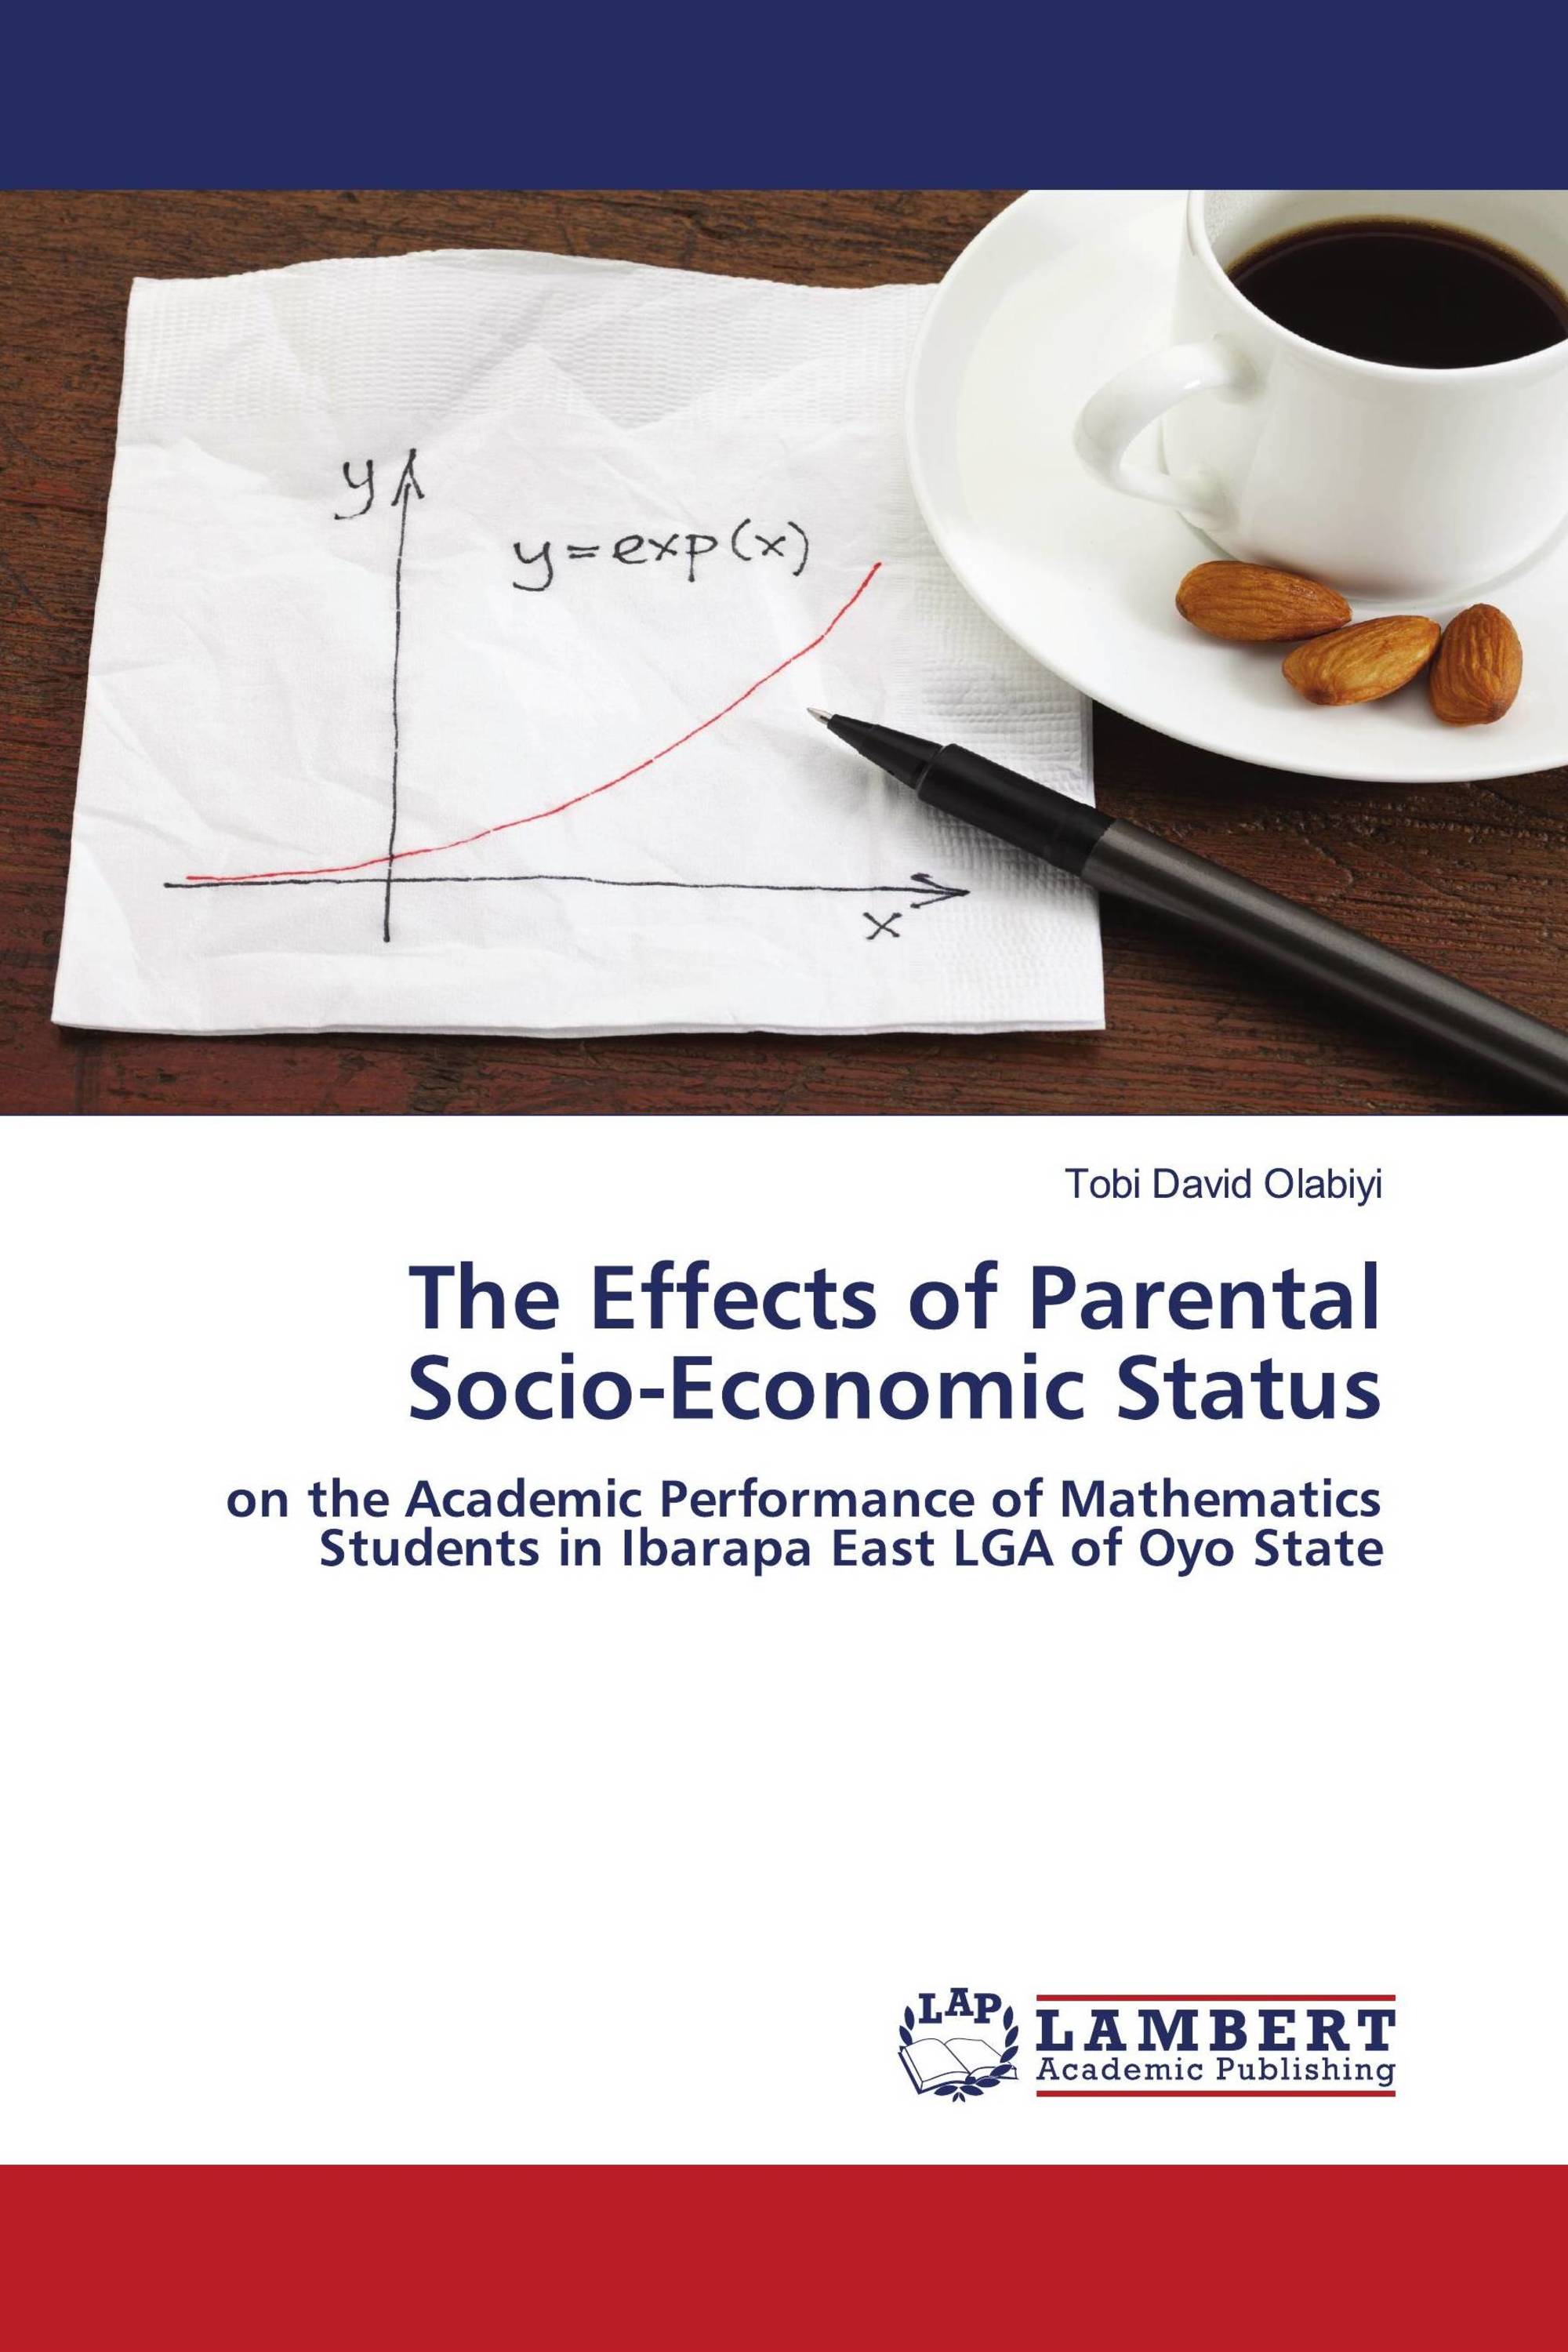 The Effects of Parental Socio-Economic Status